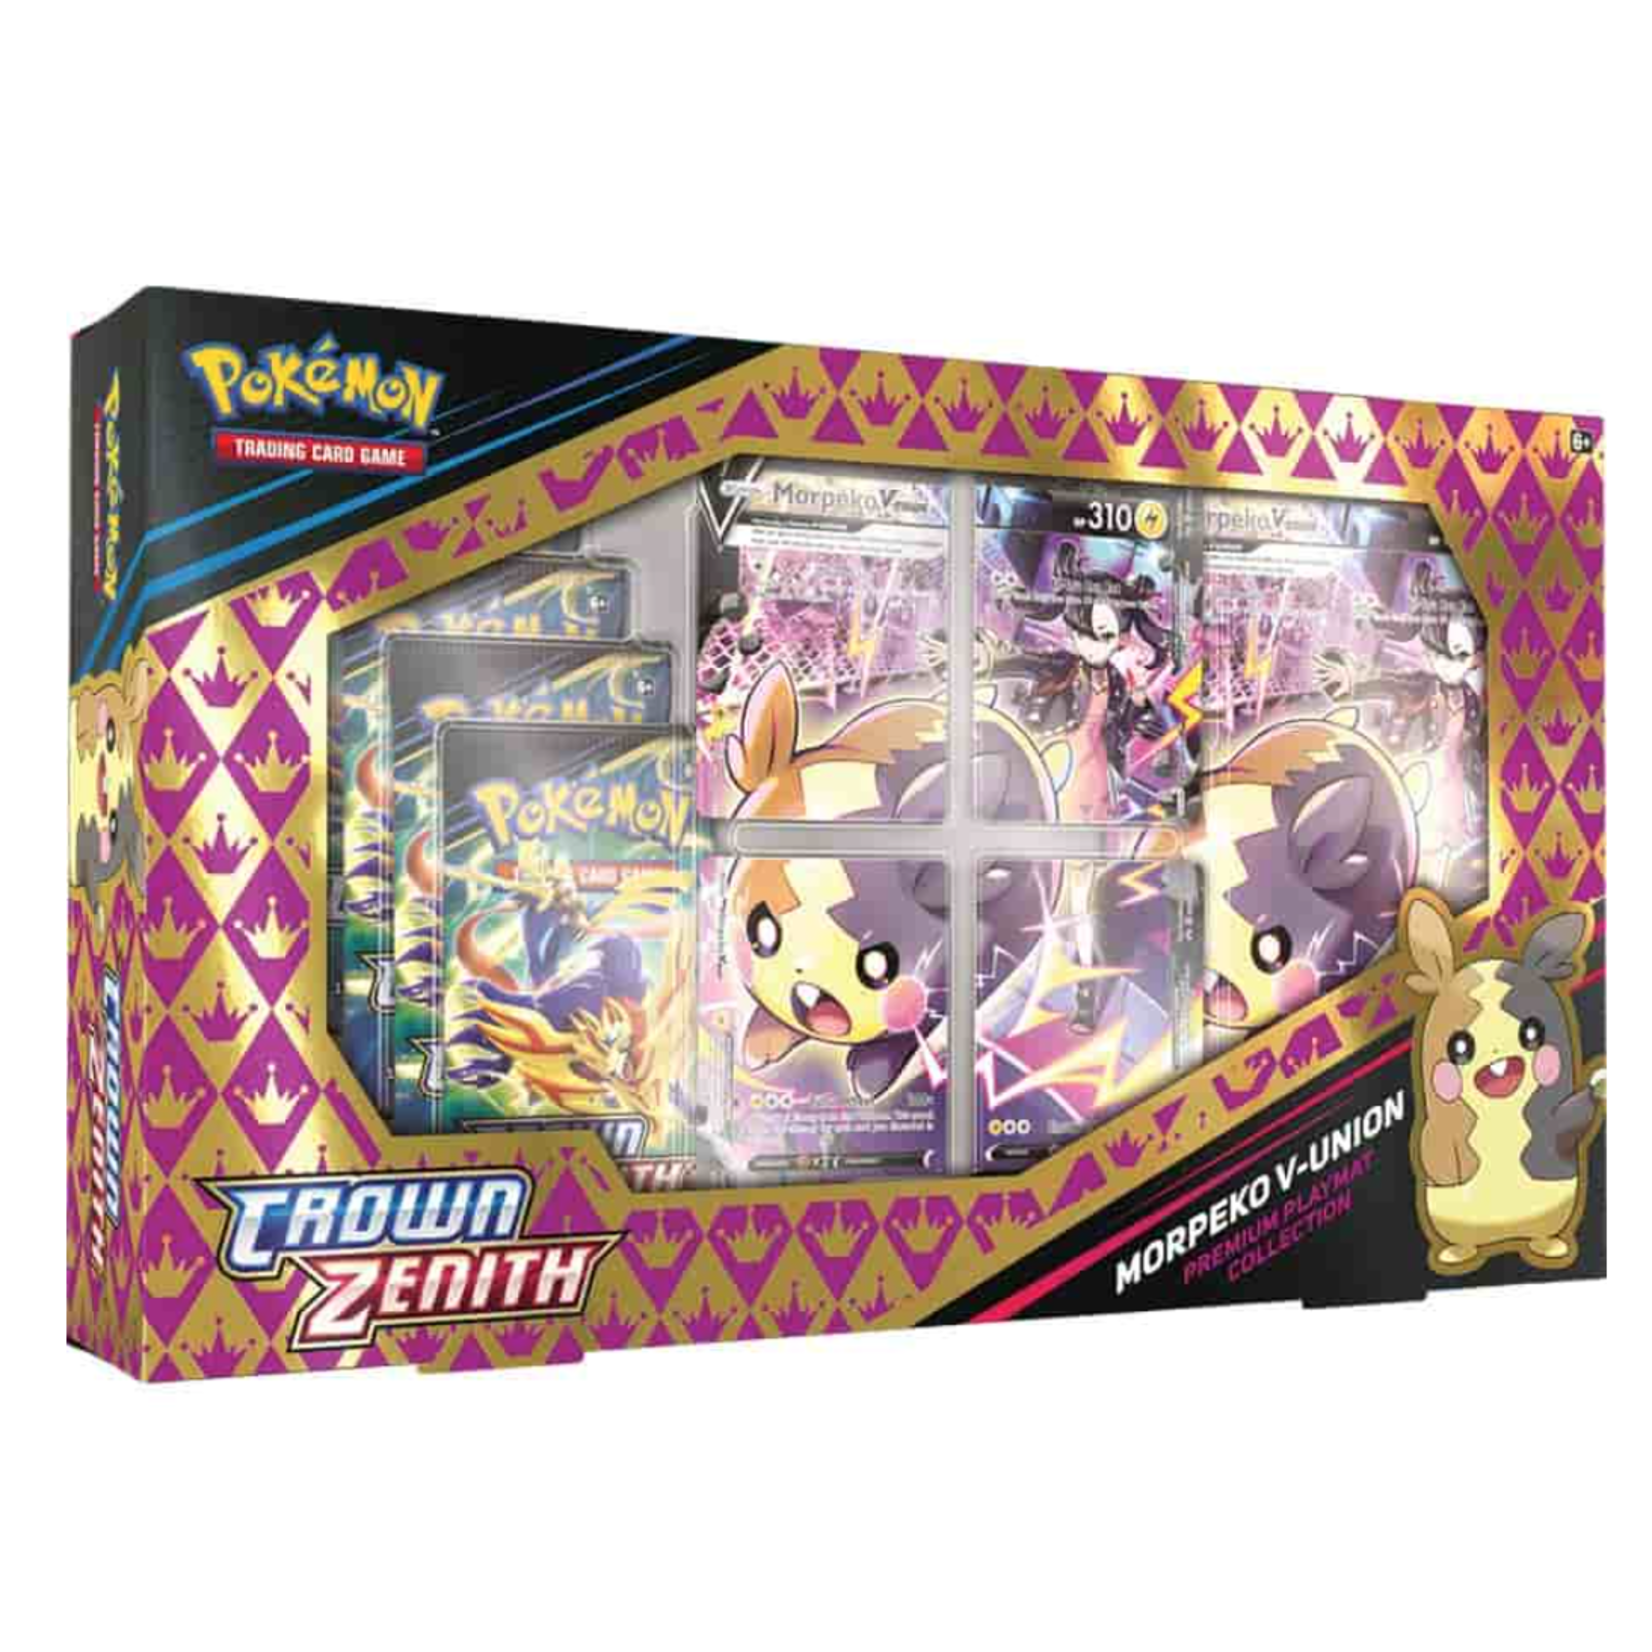 Pokémon Pokémon Trading Card Game: Playmat Crown Zenith Premium Collection (Morpeko V-UNION)